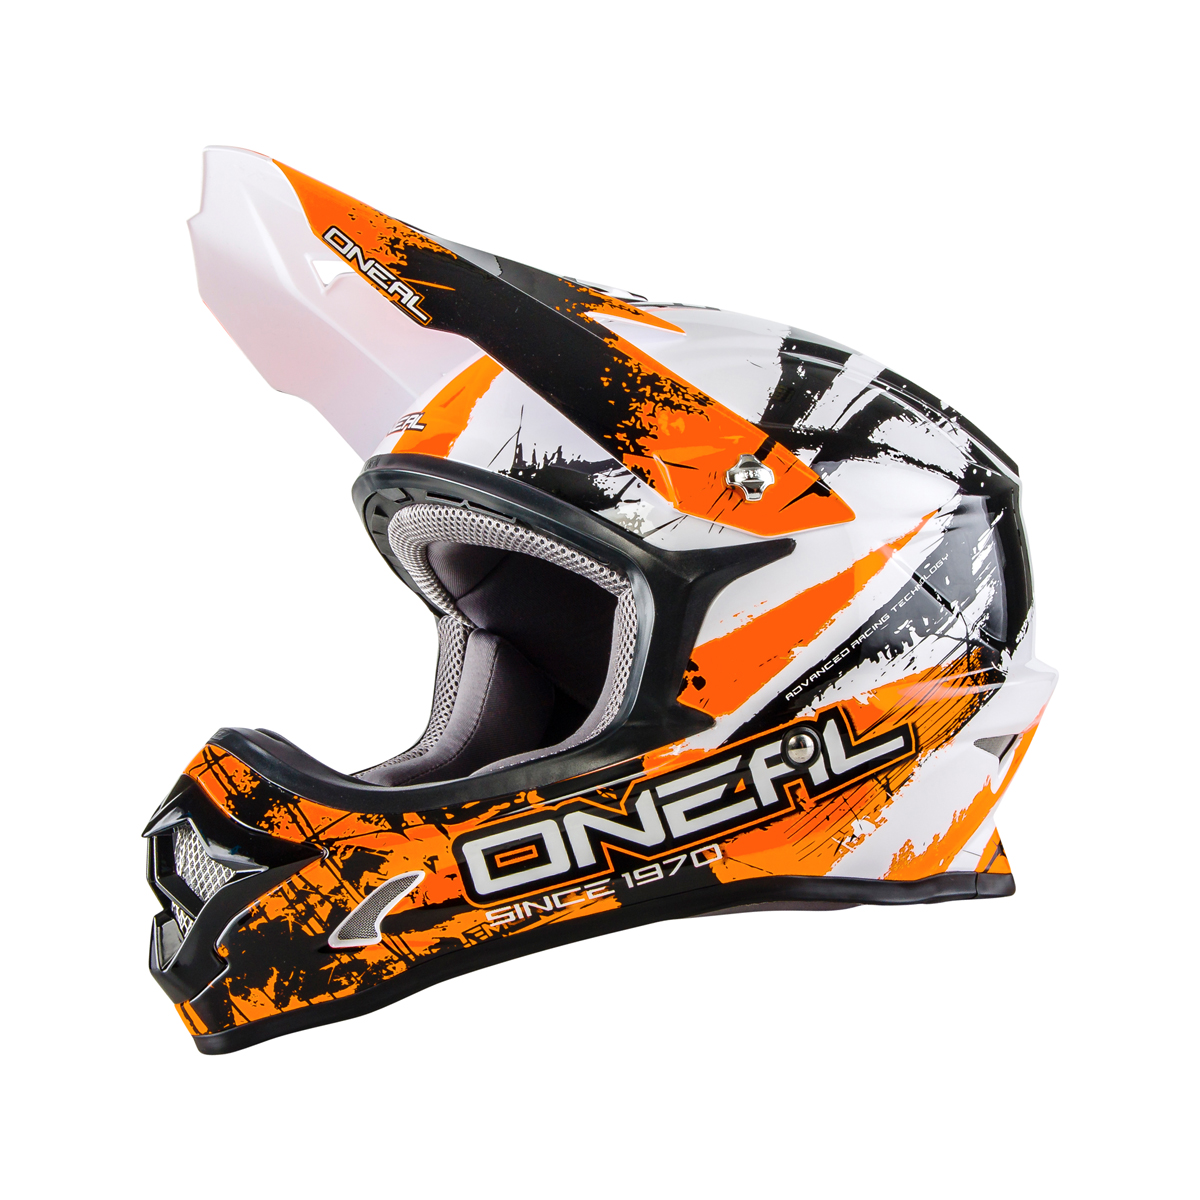 ONEAL 3 Series Youth Motocross Enduro Kinder MTB Helm Fuel schwarz/orange 2018 Oneal